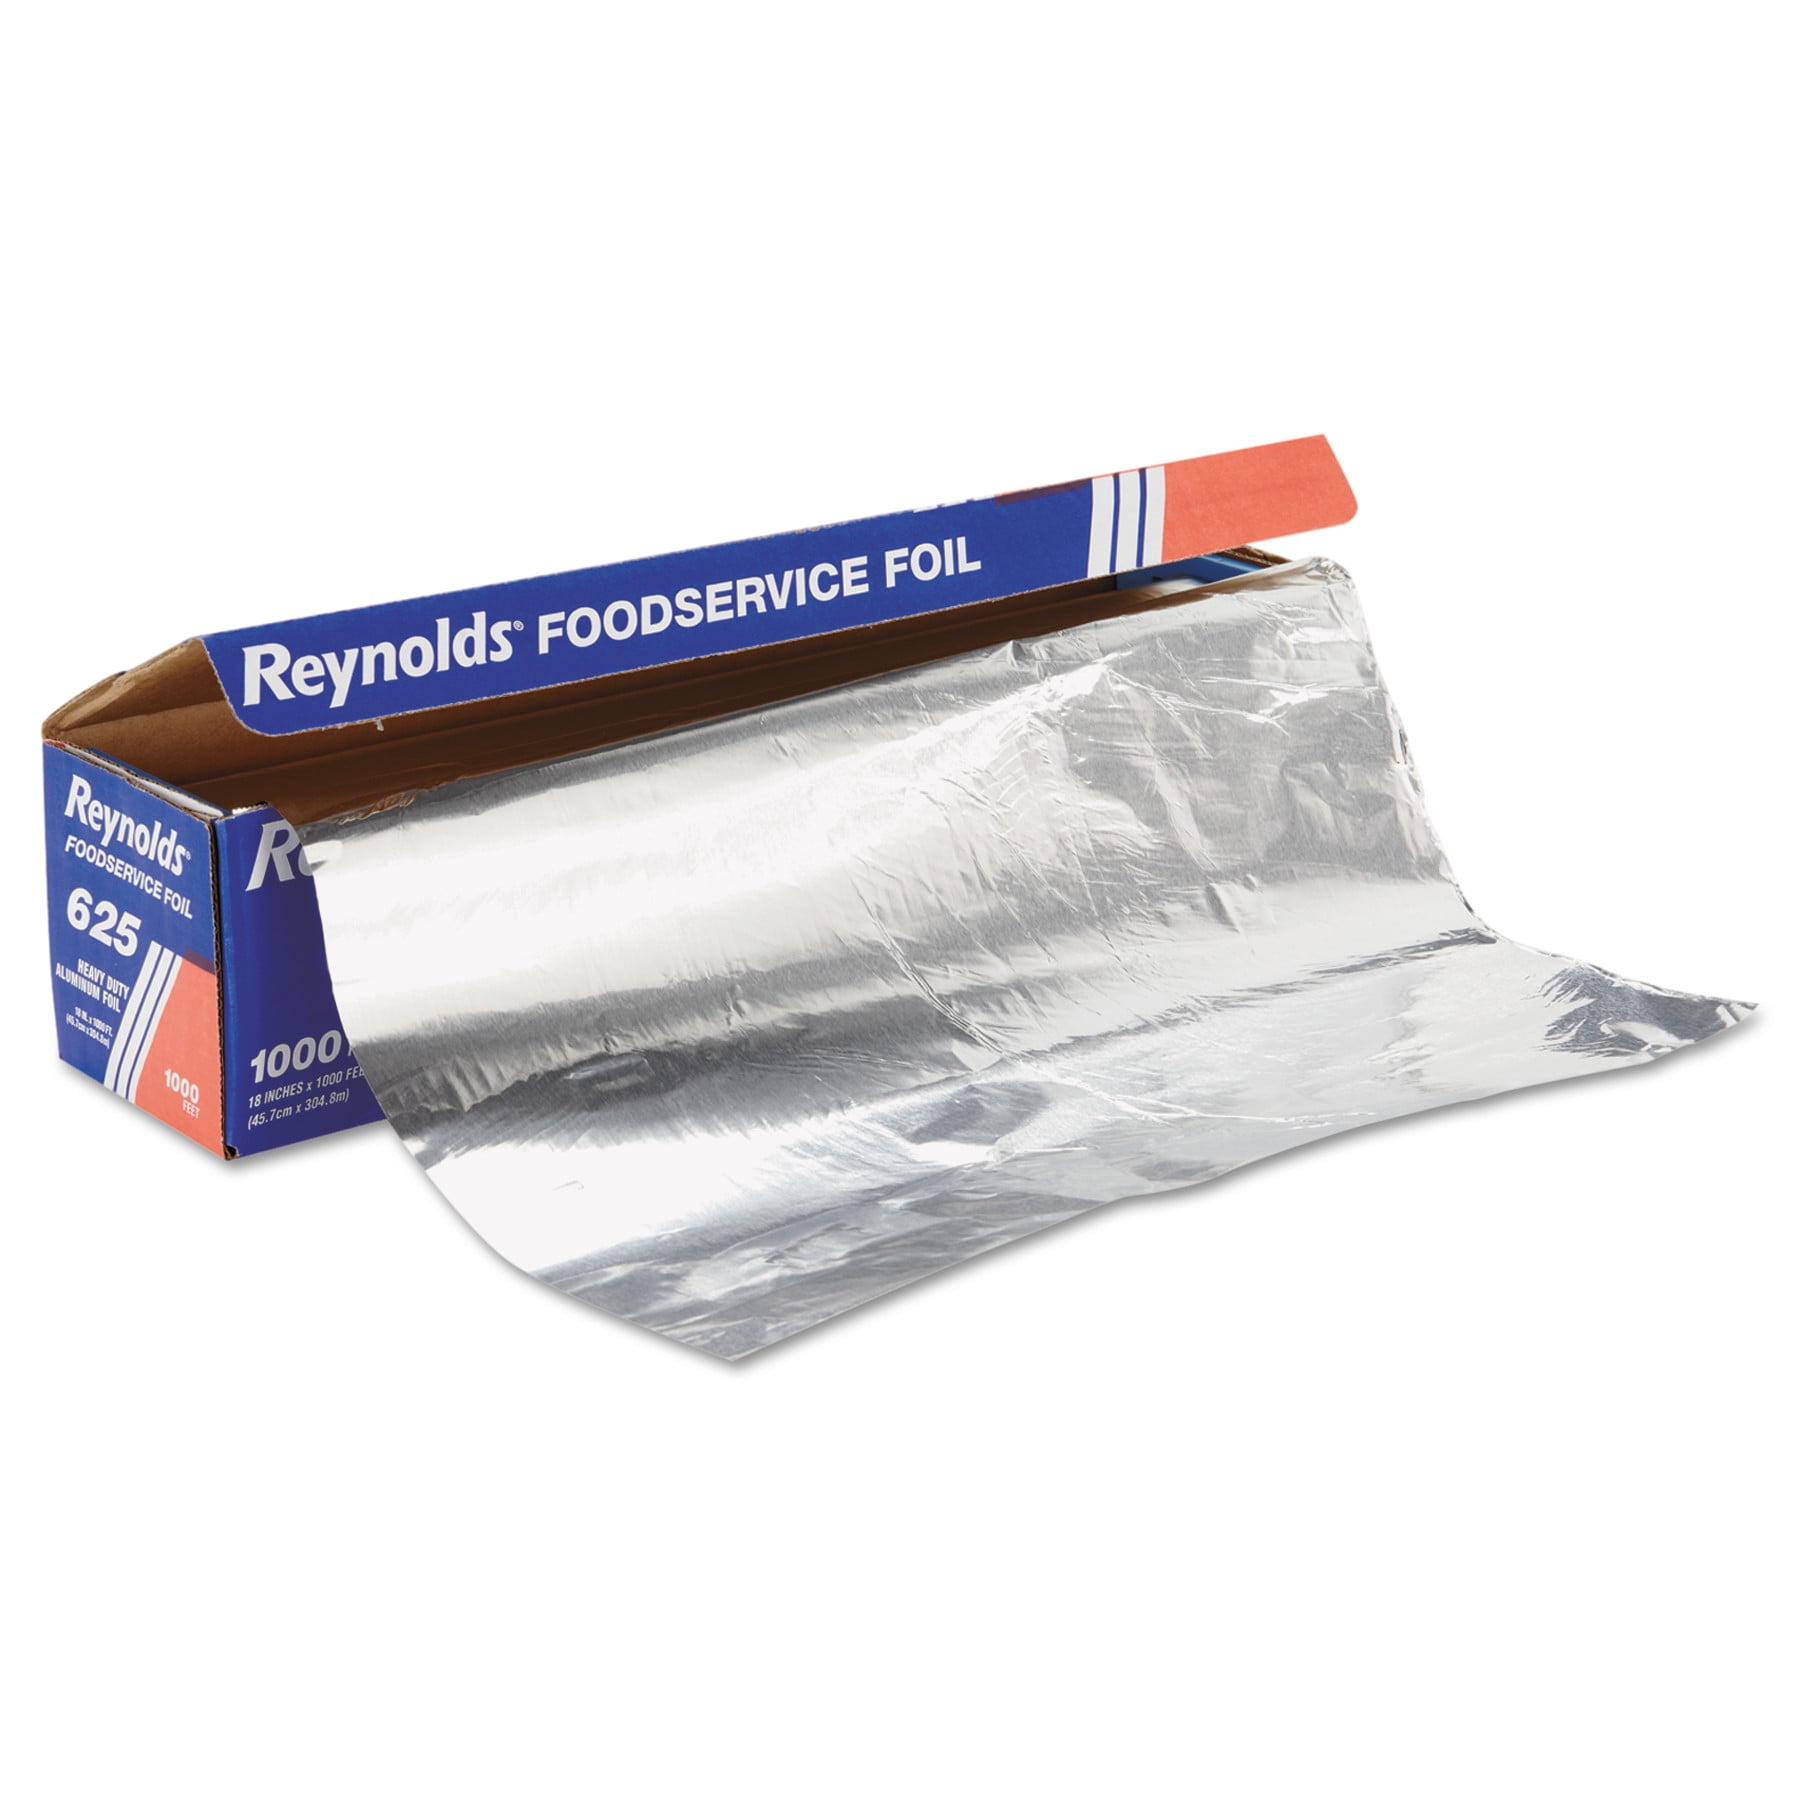 Handi-Foil 24"x1000' Heavy Duty Aluminum Foil Wrap Food Service Roll REF# 12408 